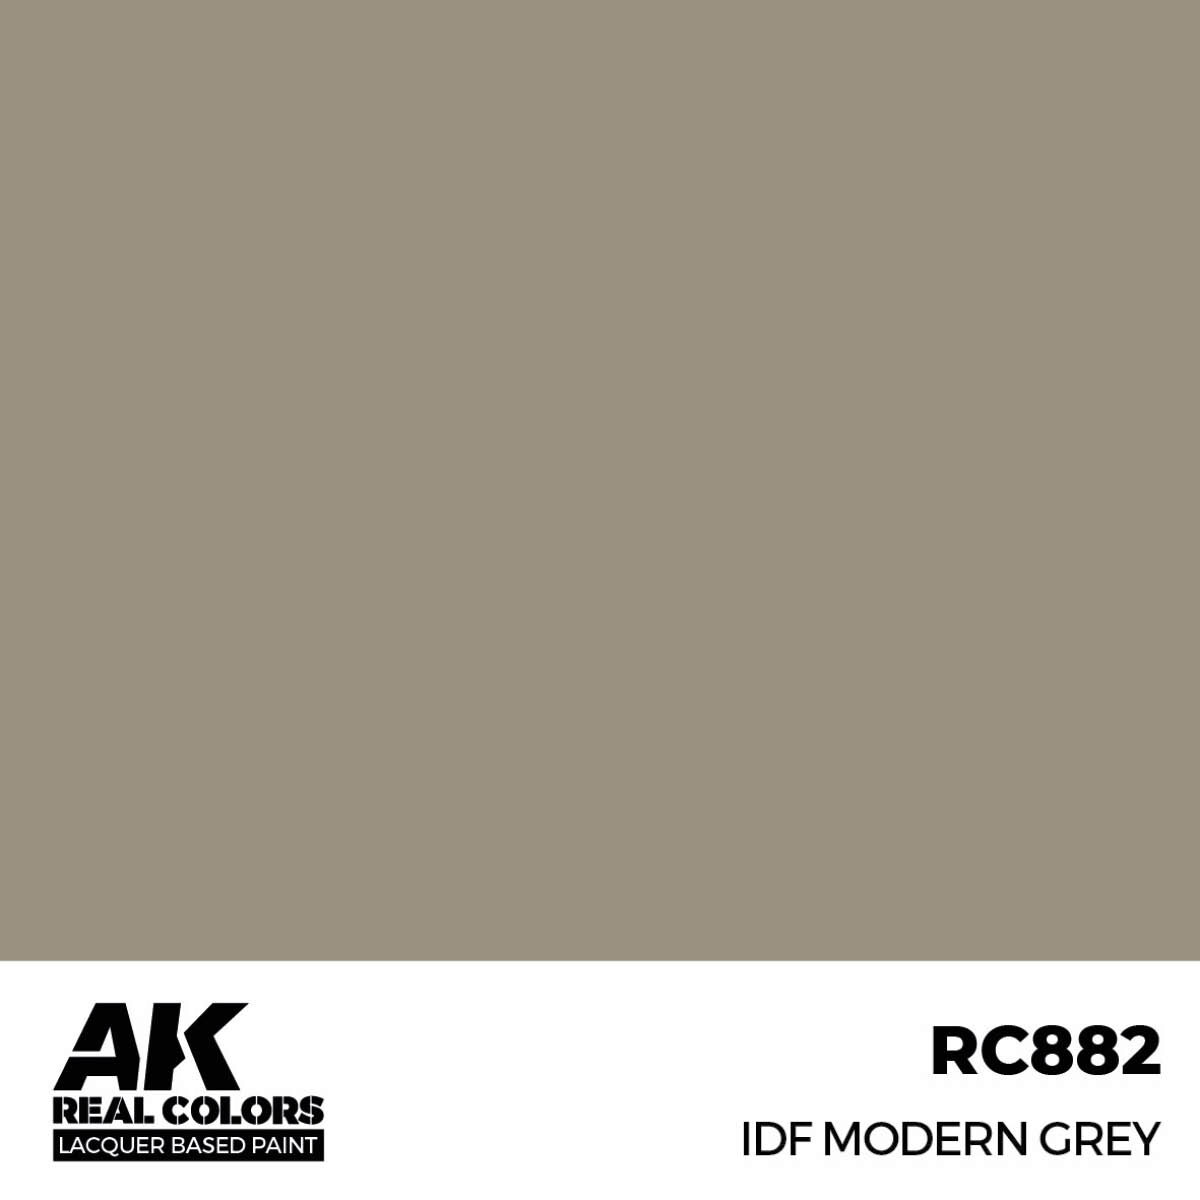 AK RC882 Real Colors IDF Modern Grey 17 ml.